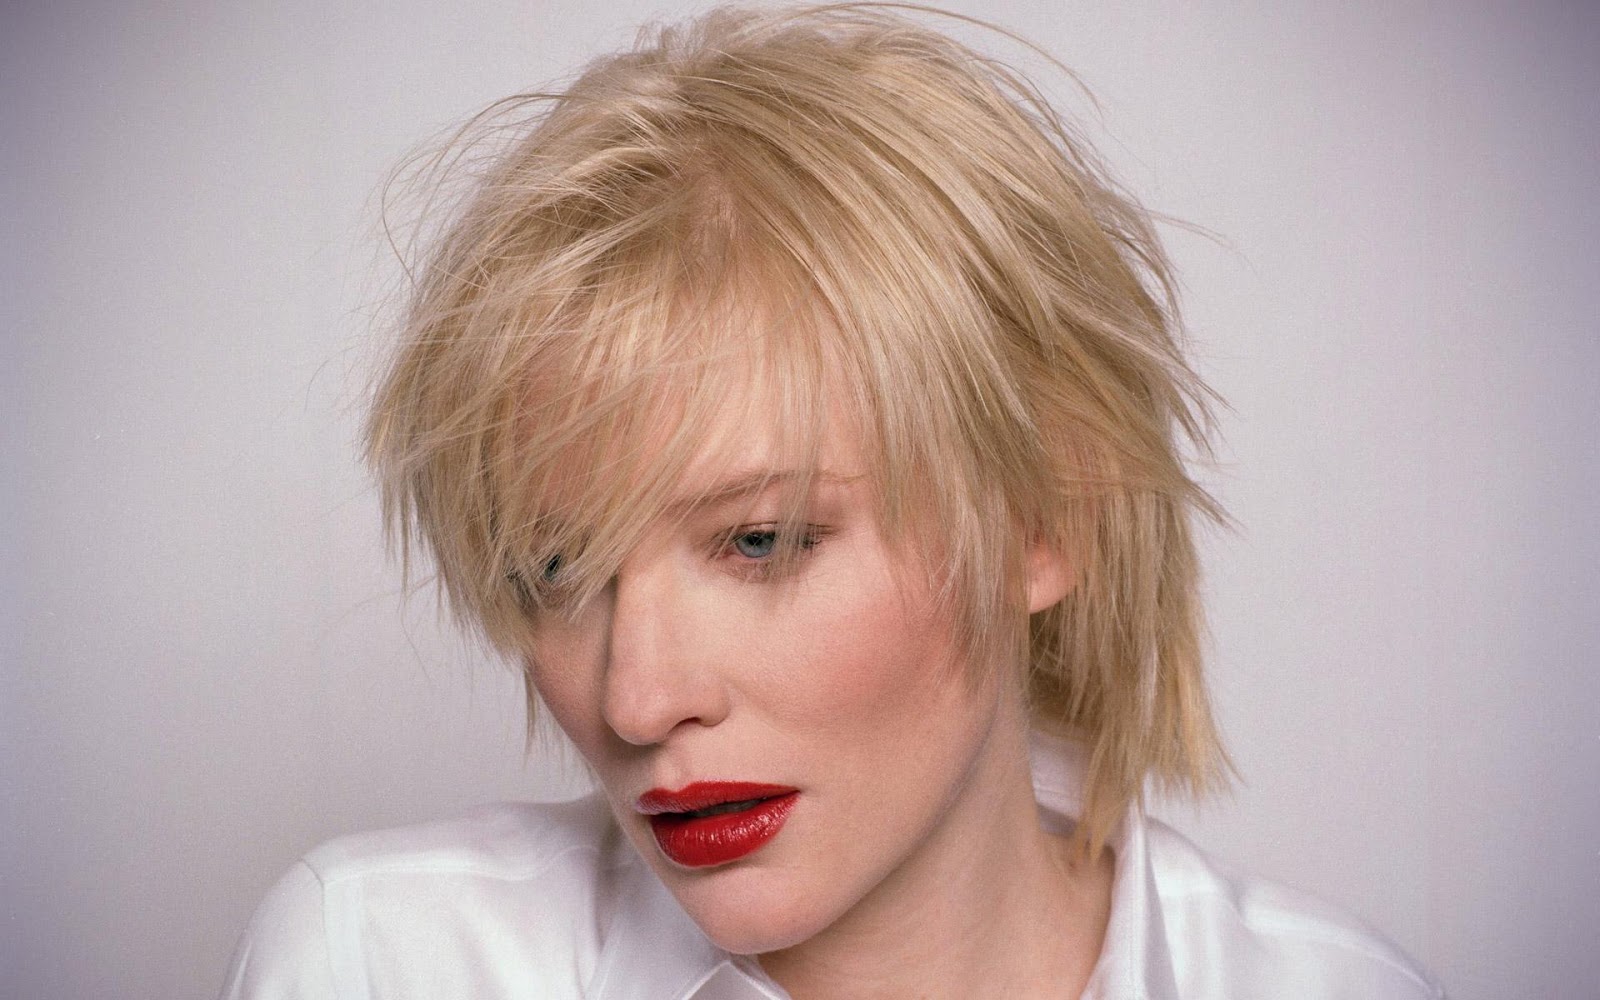 Cate Blanchett Hd Wallpapers Cate Blanchett Hd Wallpapers New Hot Cate Blanchett Hd Wallpapers